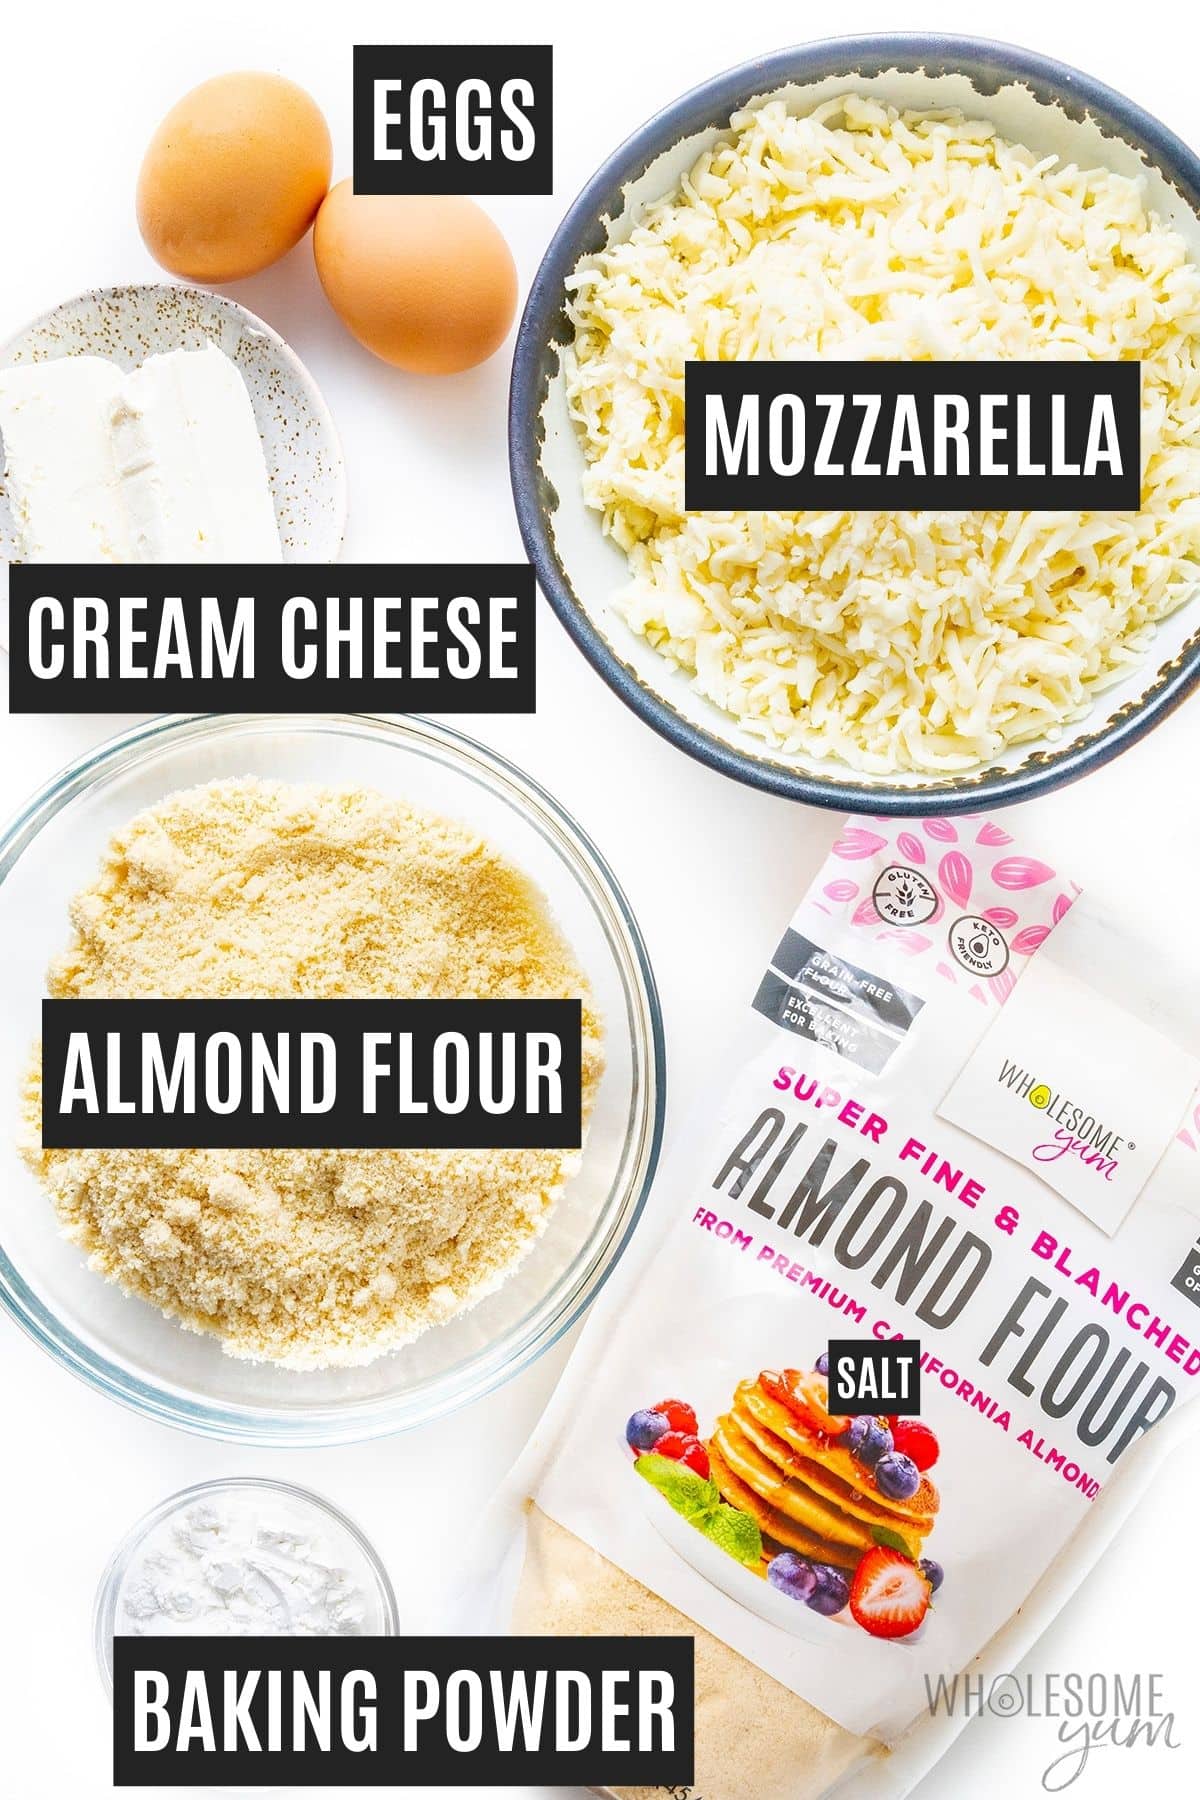 Almond flour, cheeses, baking powder, and eggs.